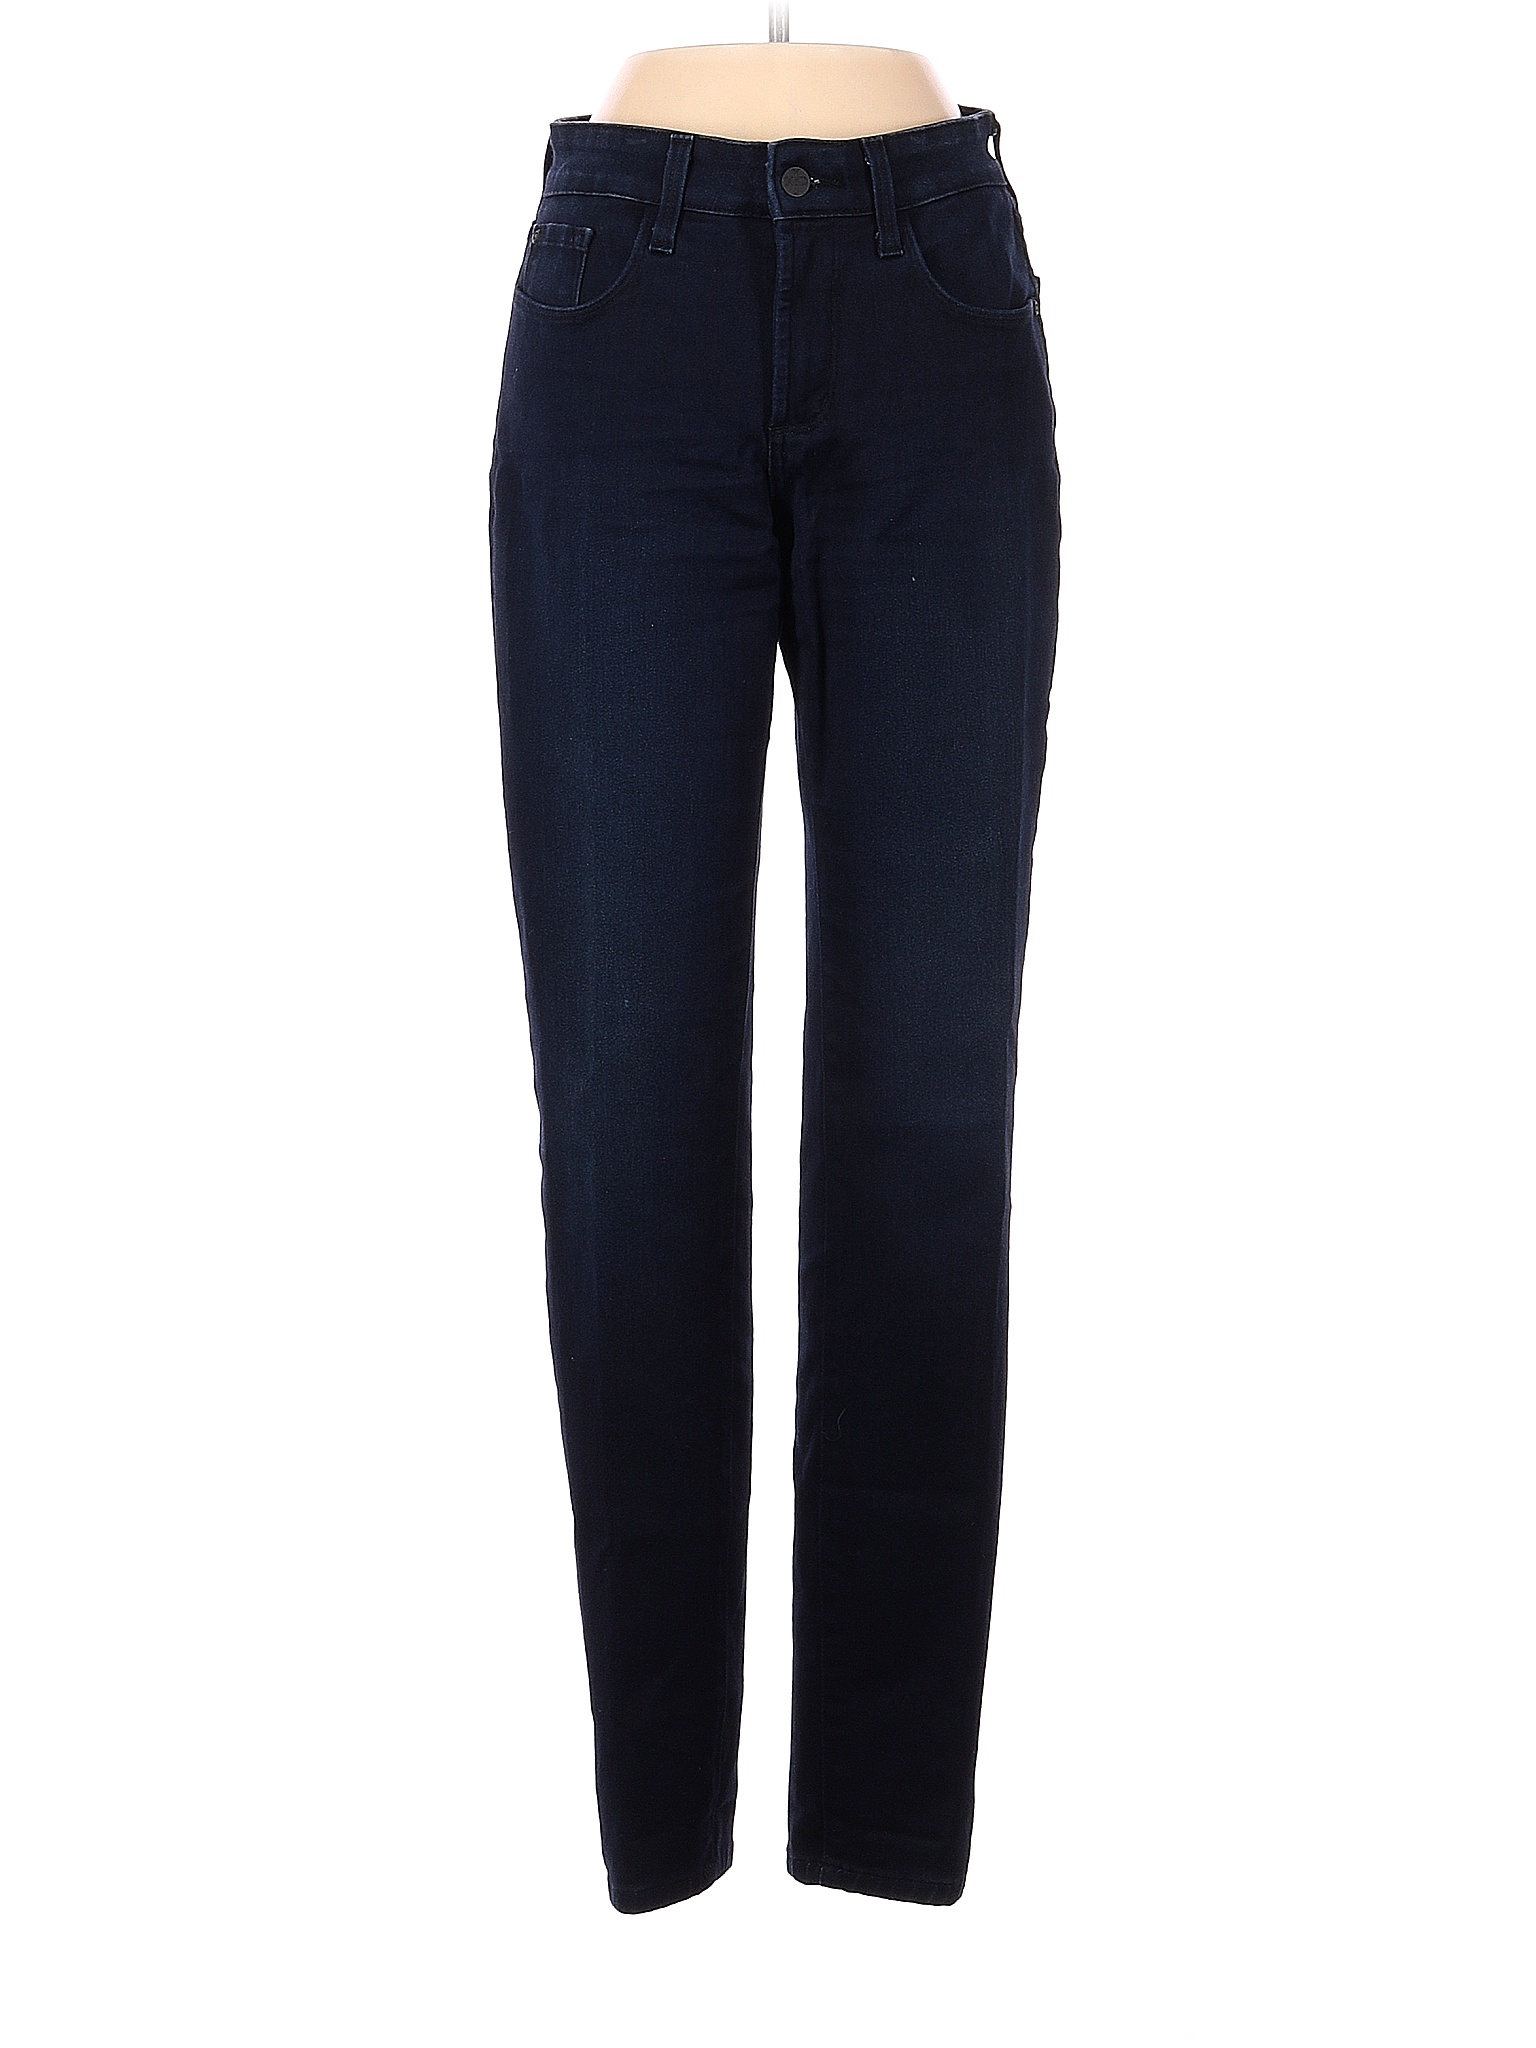 NYDJ Solid Blue Jeans Size 0 - 91% off | thredUP